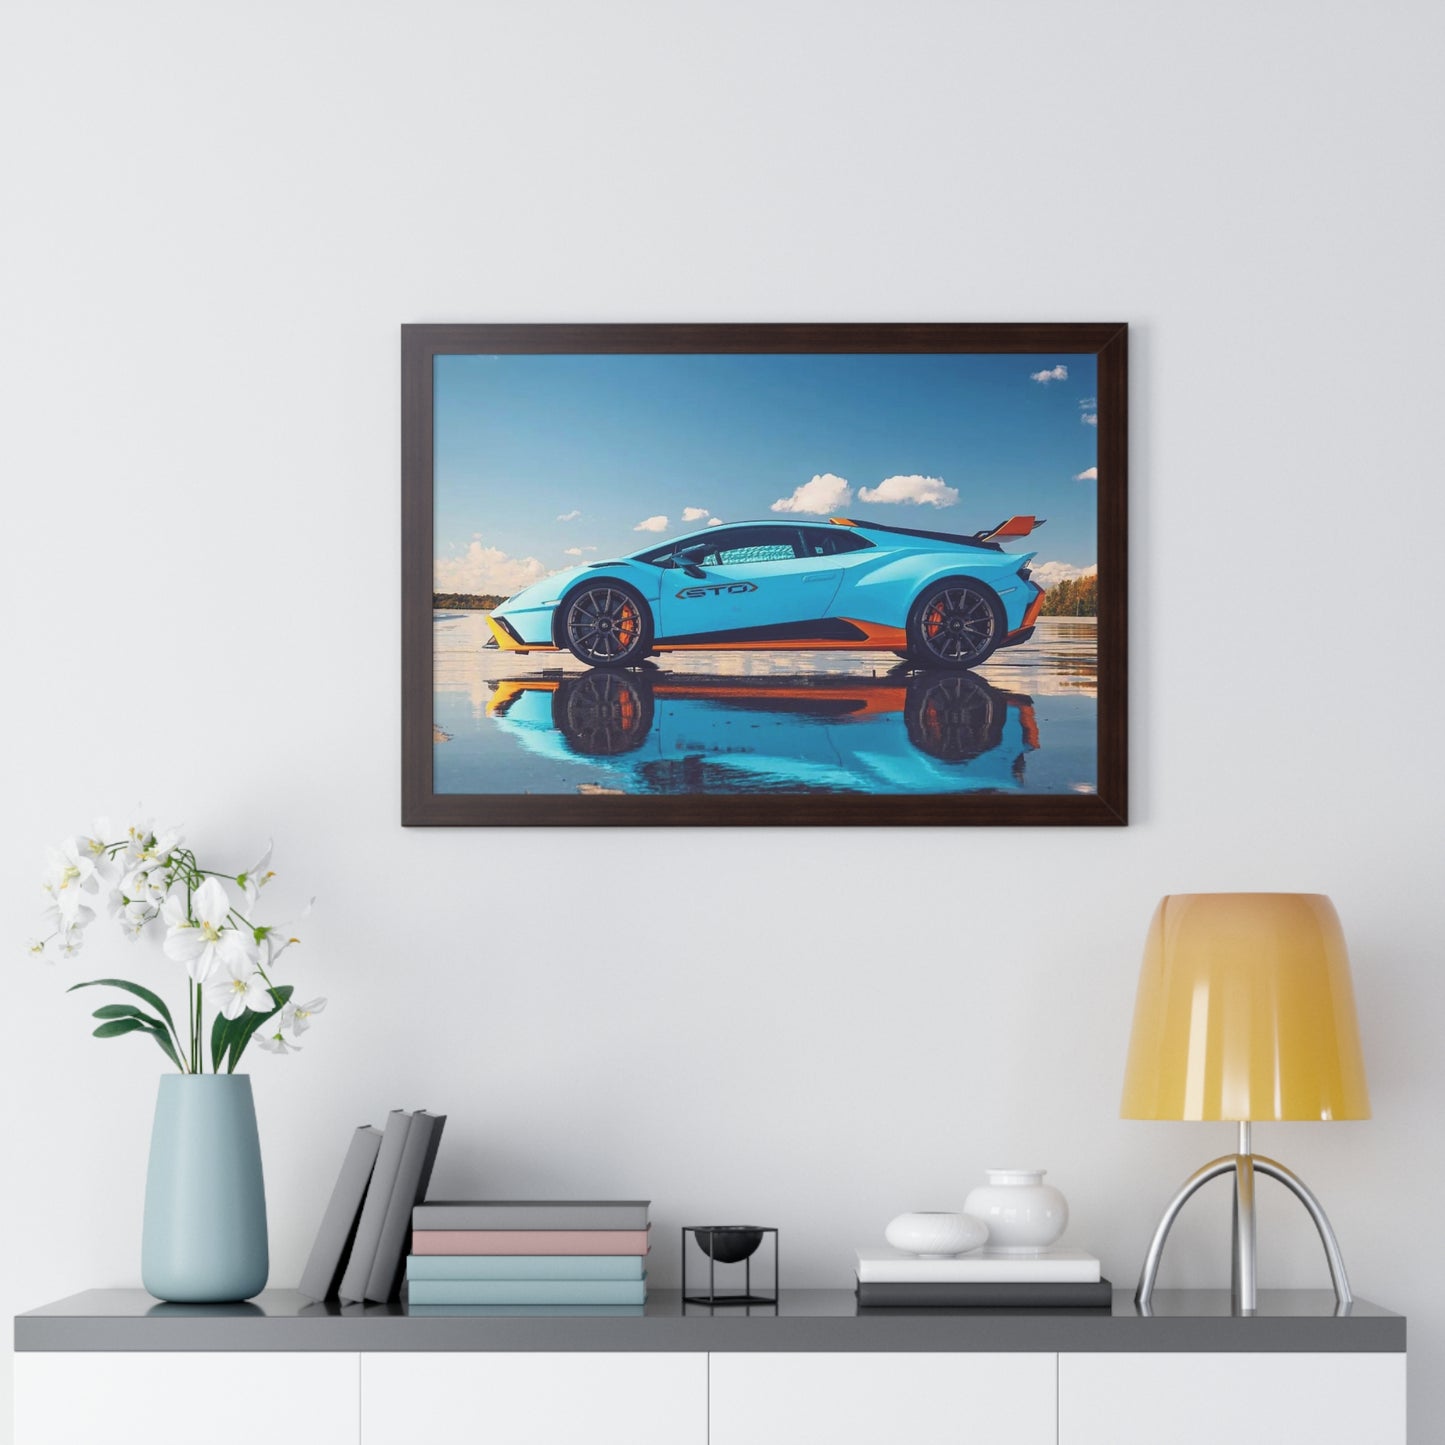 "Reflection" 30" x 20" Framed Lamborghini Poster